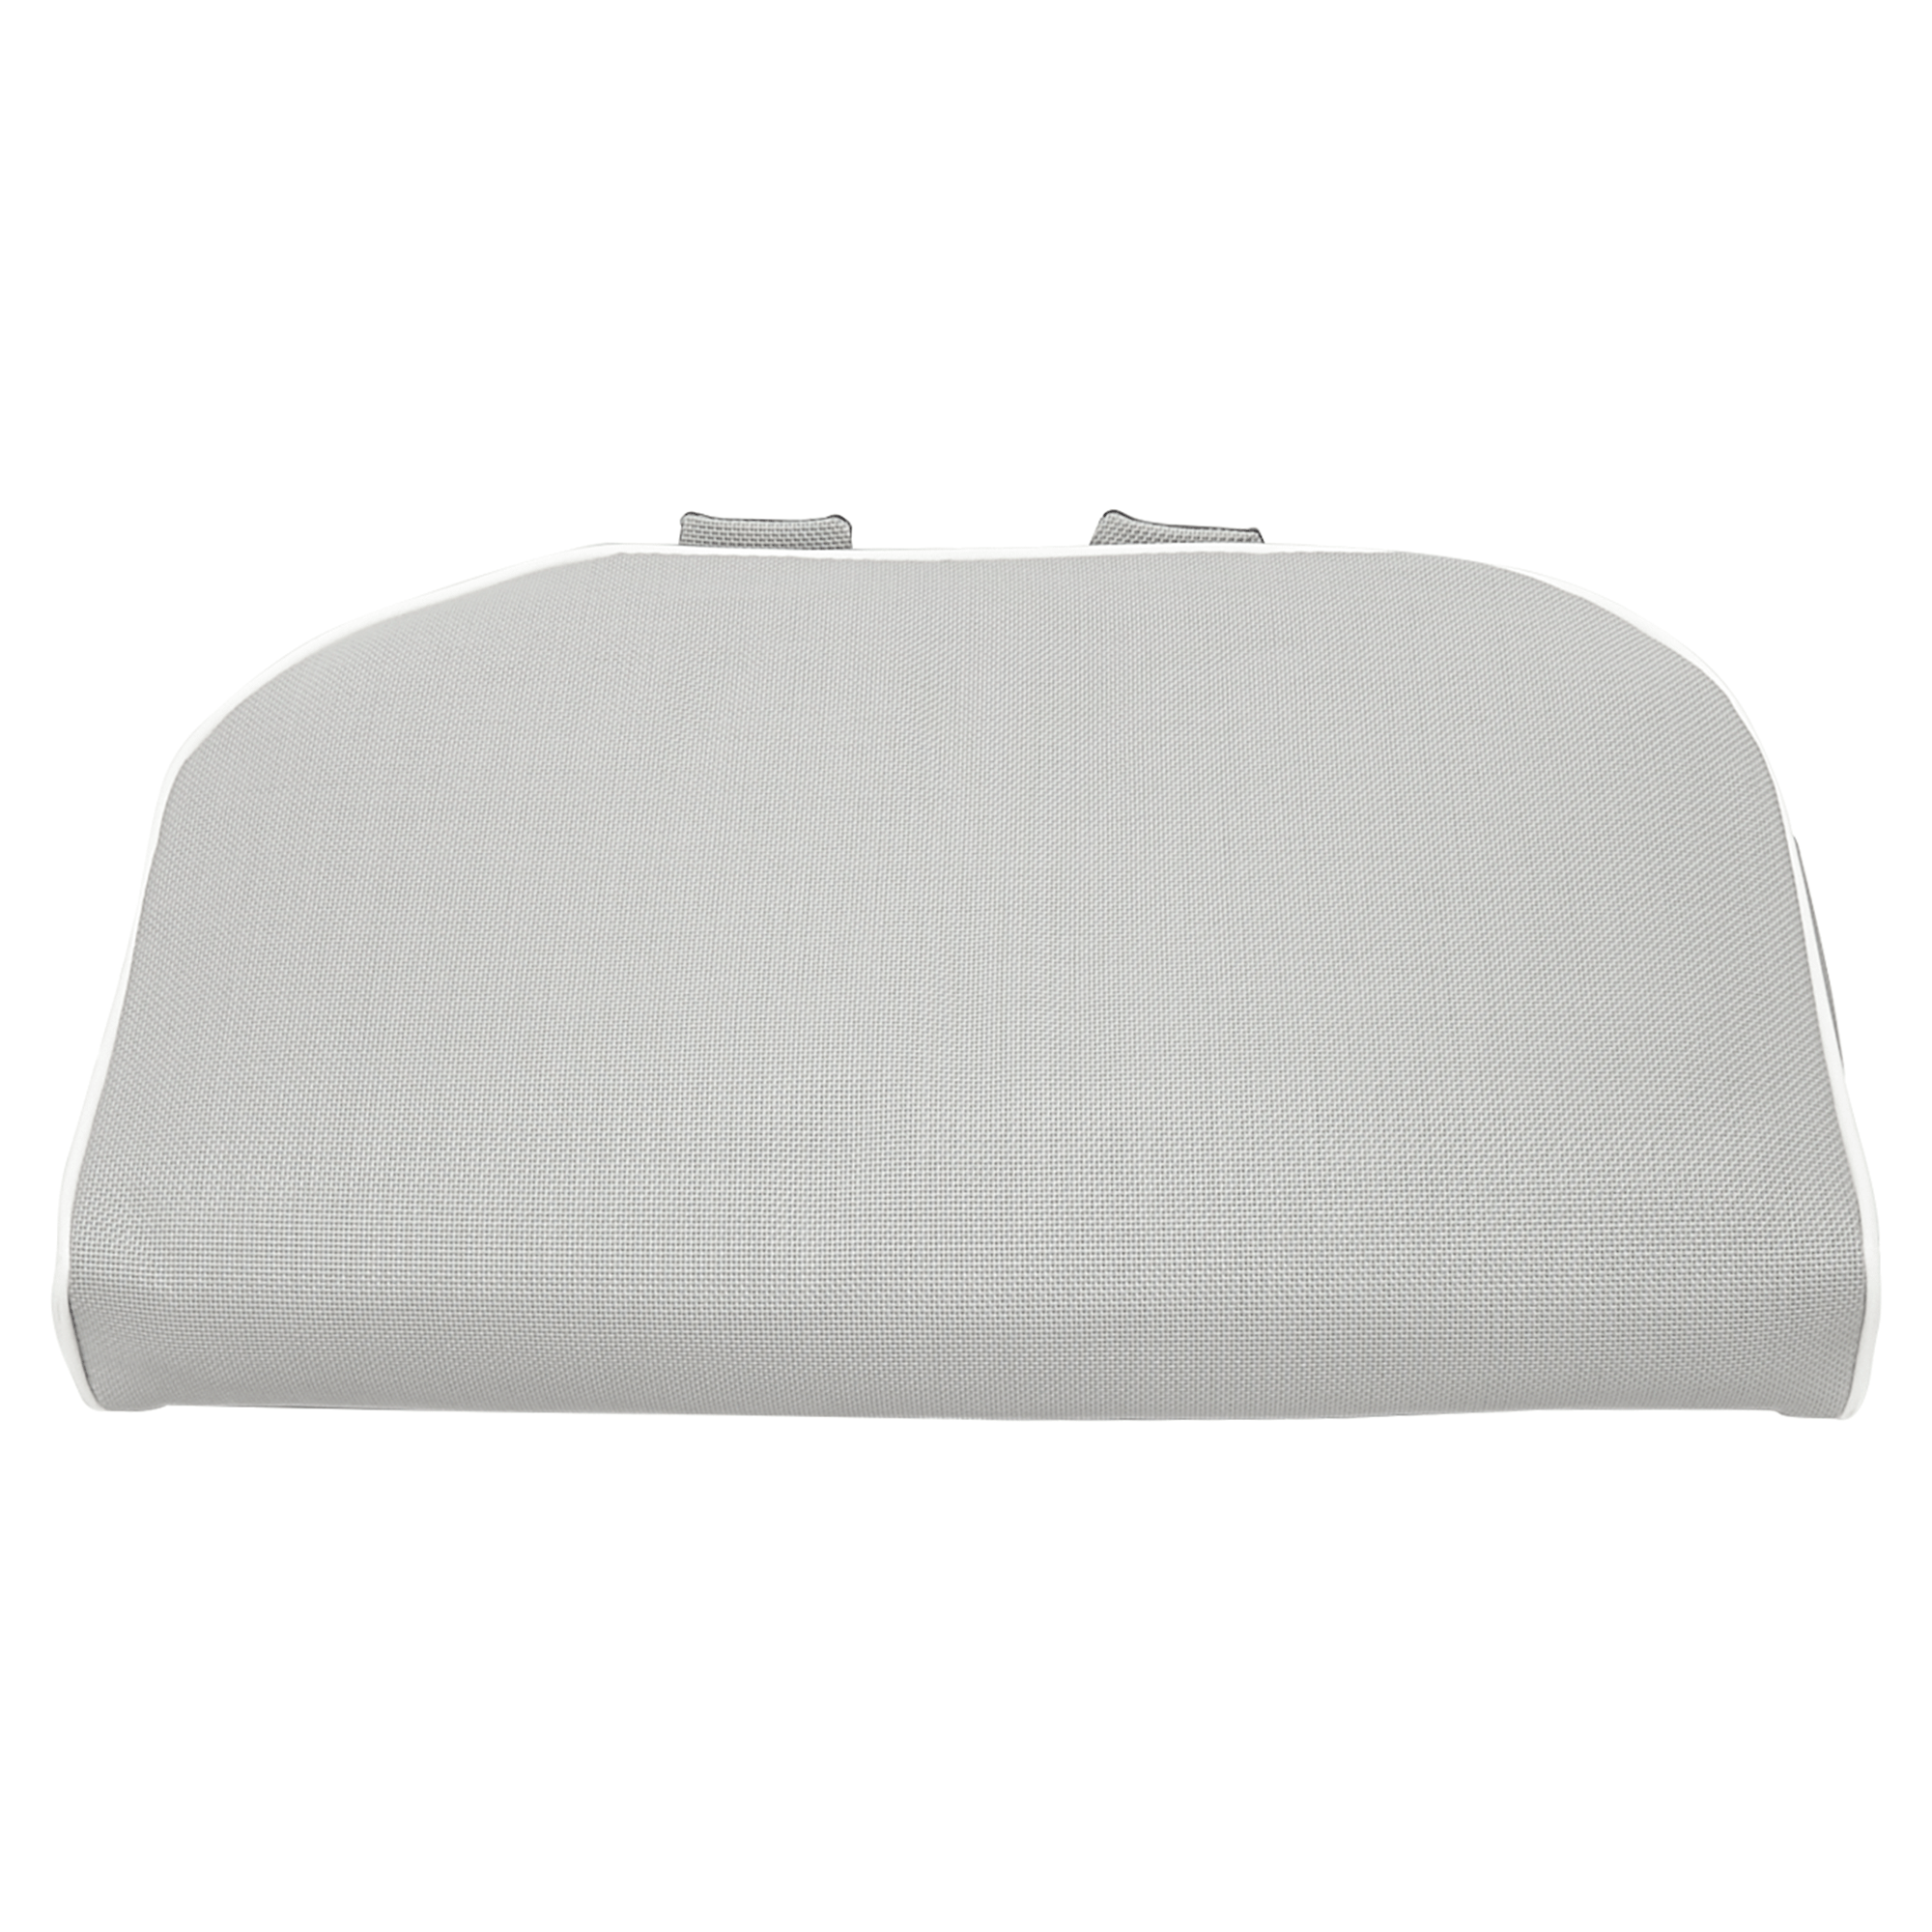 ELLA'S BUBBLES Bidet Cutout: Seat Pillow and Riser for Walk-In Tubs – SeatRiser-3U (20 1/2″W x 13″L x 3 1/2″H)